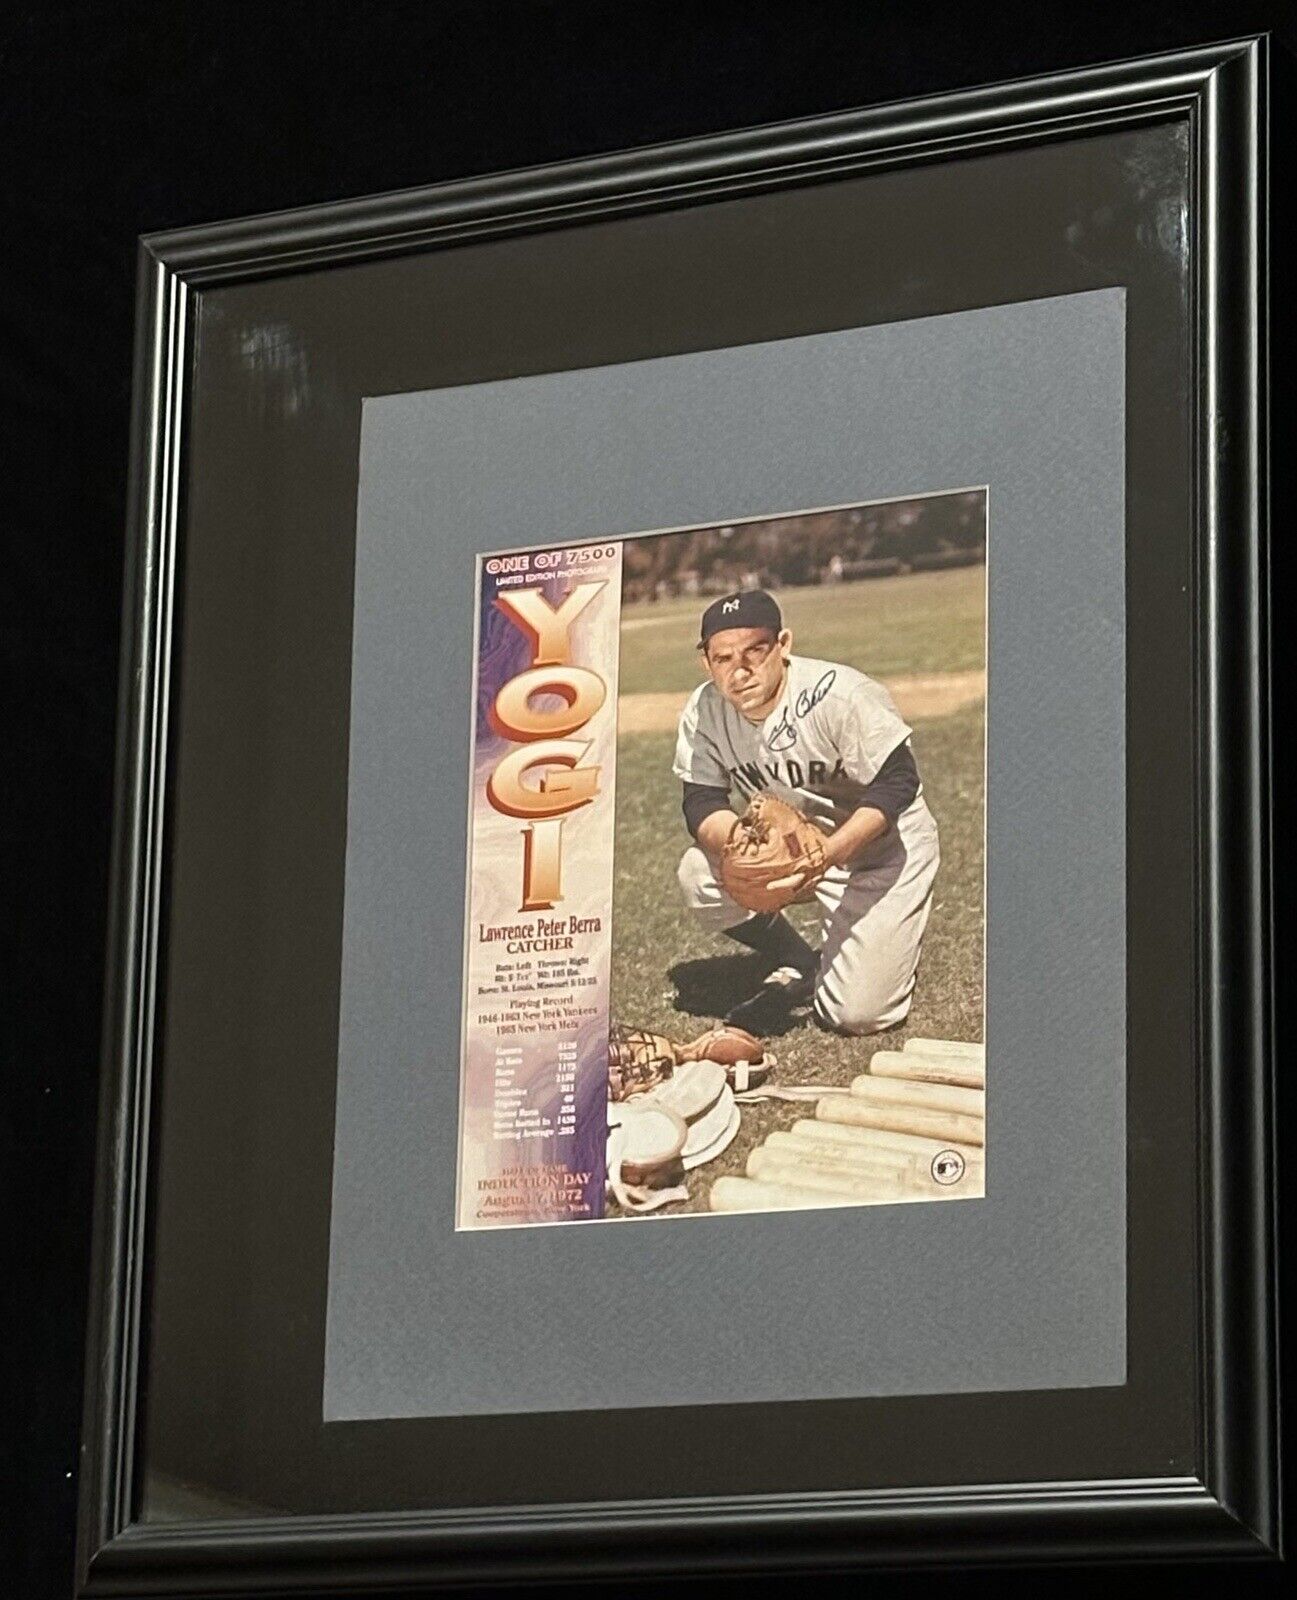 Yogi Berra Autographed COA  /7500  New York Yankees,  8/07/72  Shadowbox  HOF